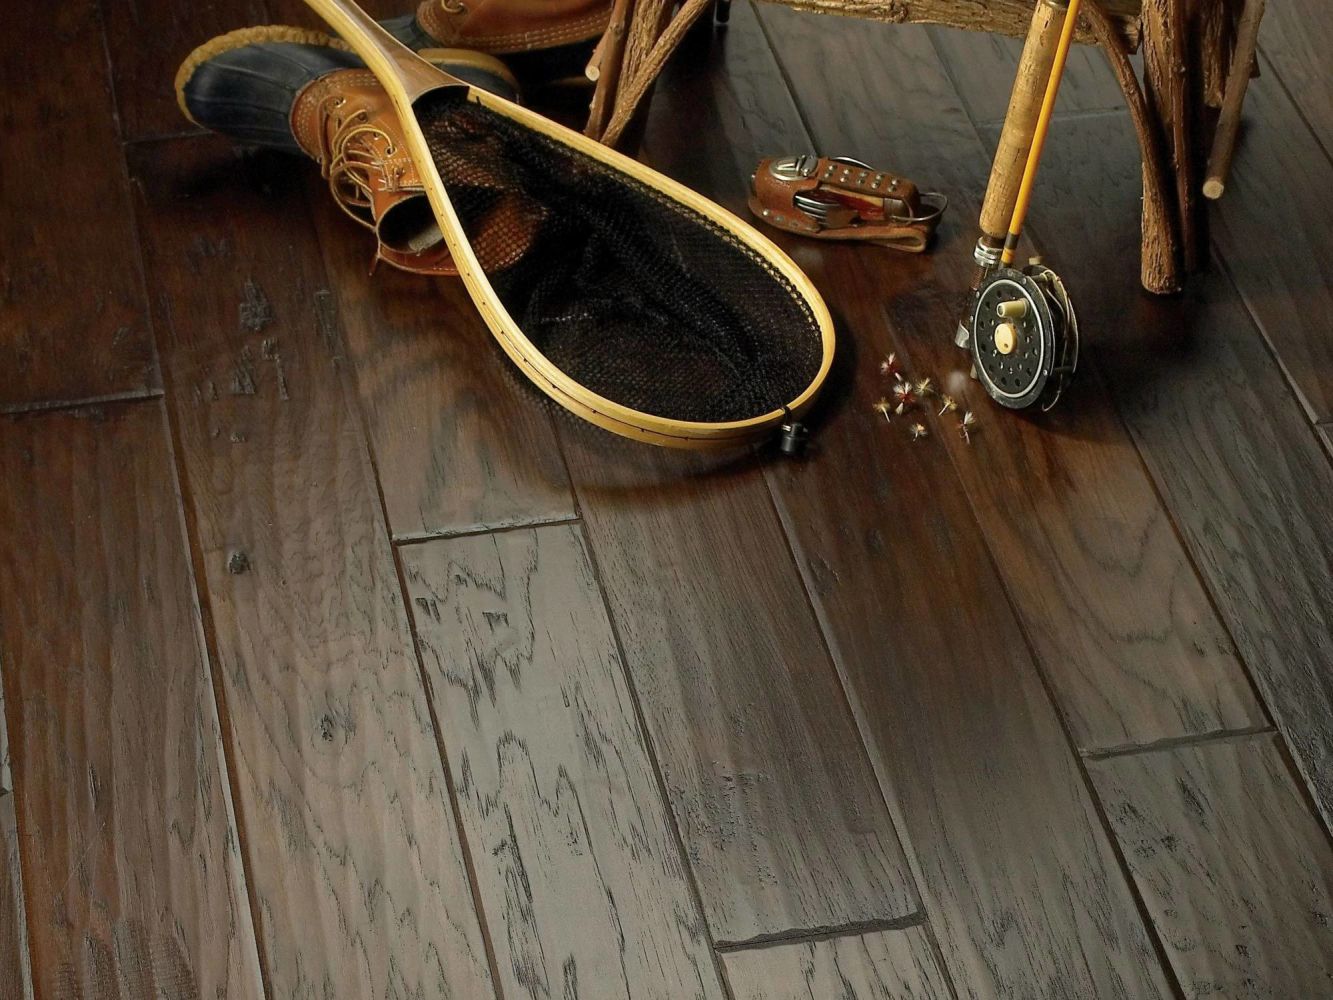 Shaw Floors Carpets Plus Hardwood Pine Hurst Espresso 00917_CHX18